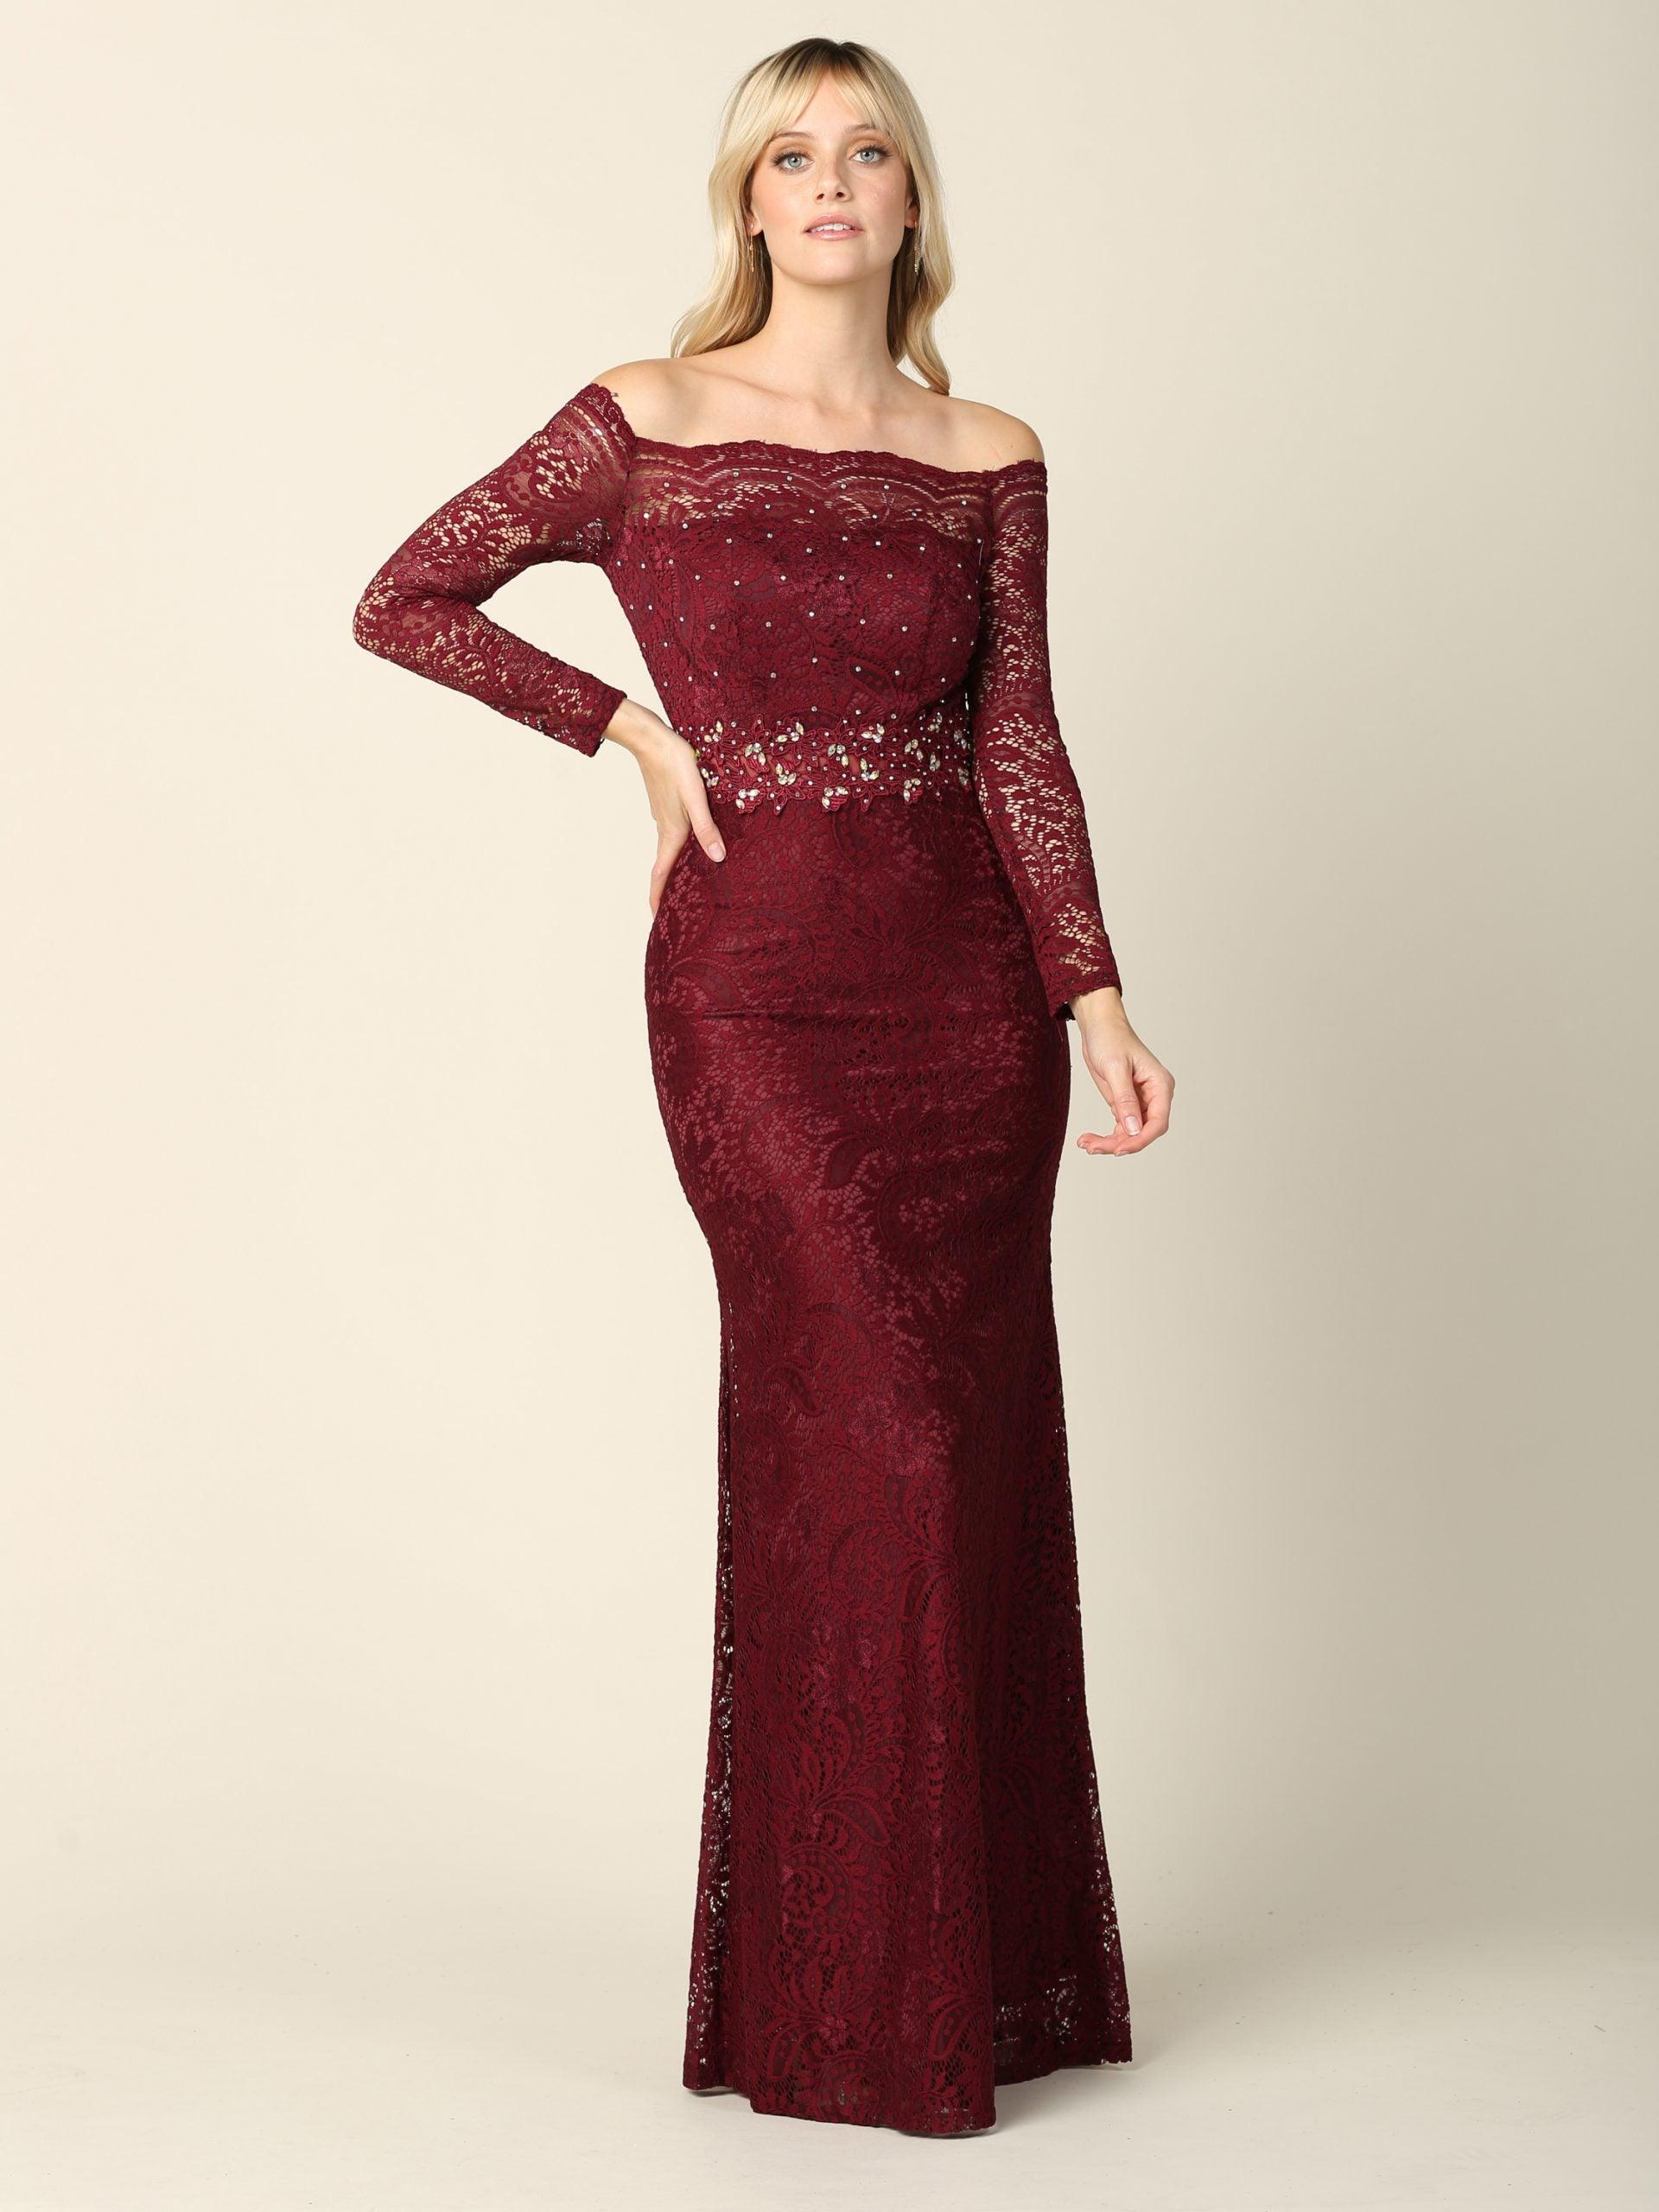 Long Off Shoulder Formal Lace Evening Party Dress - The Dress Outlet